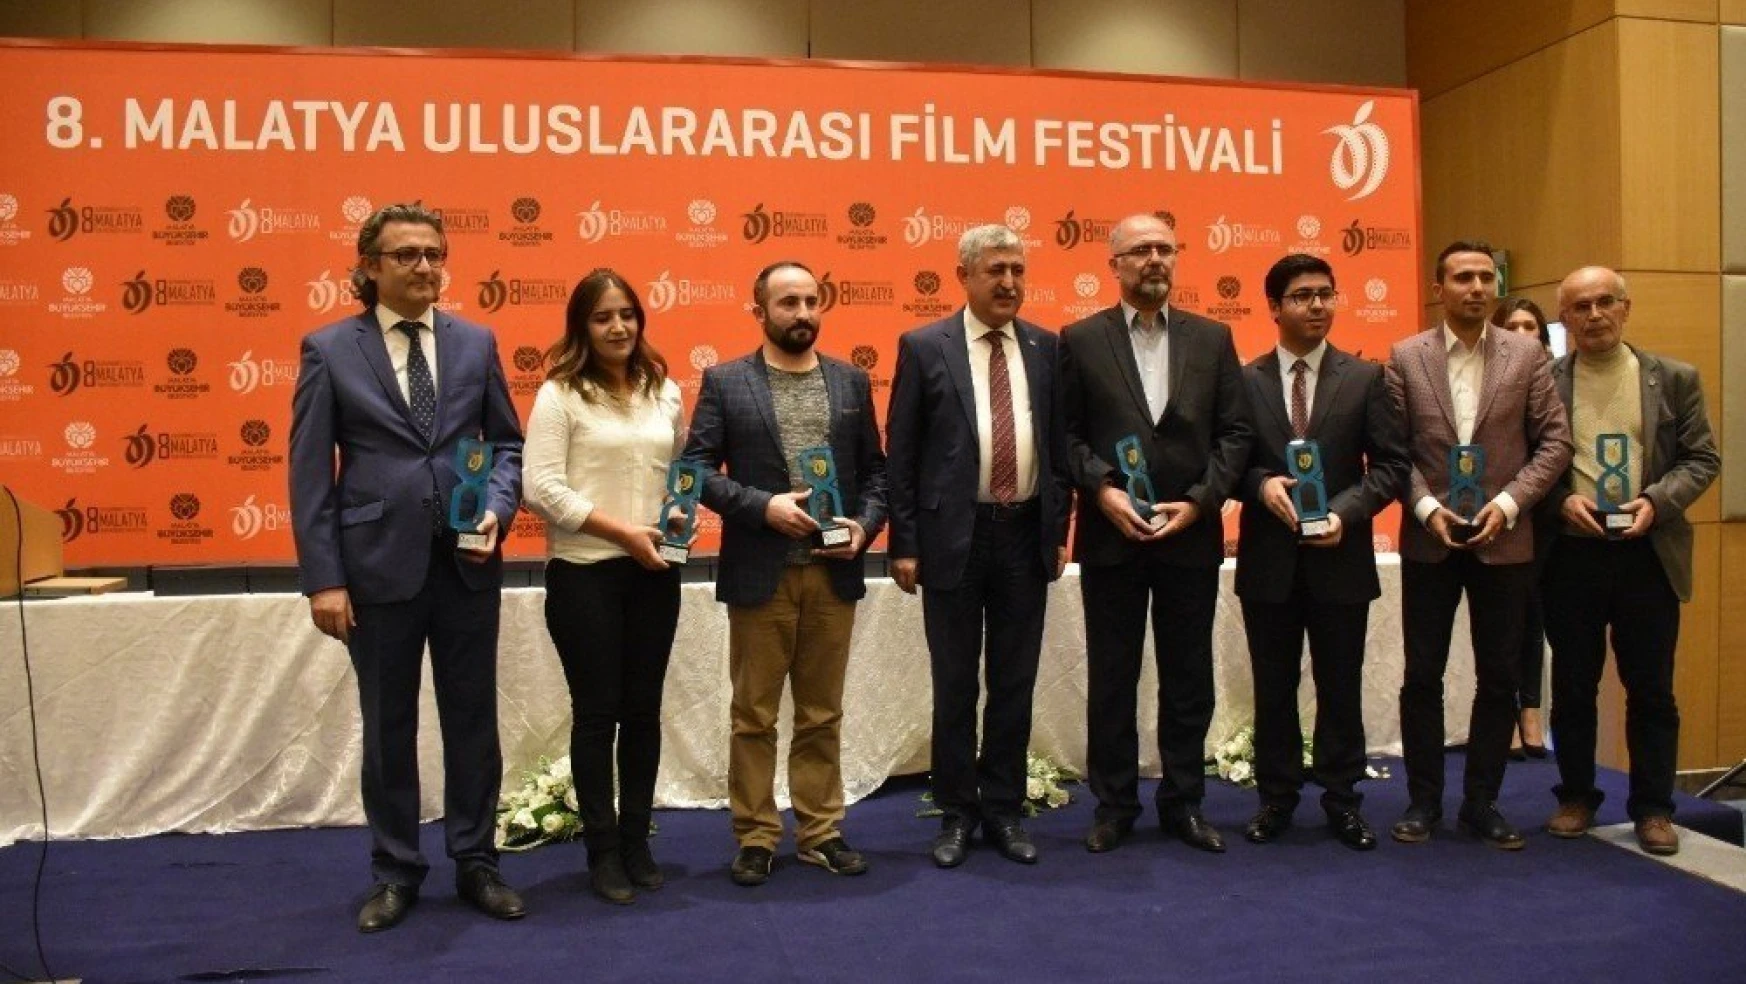 Film Festivali'nde sponsorlara ödül